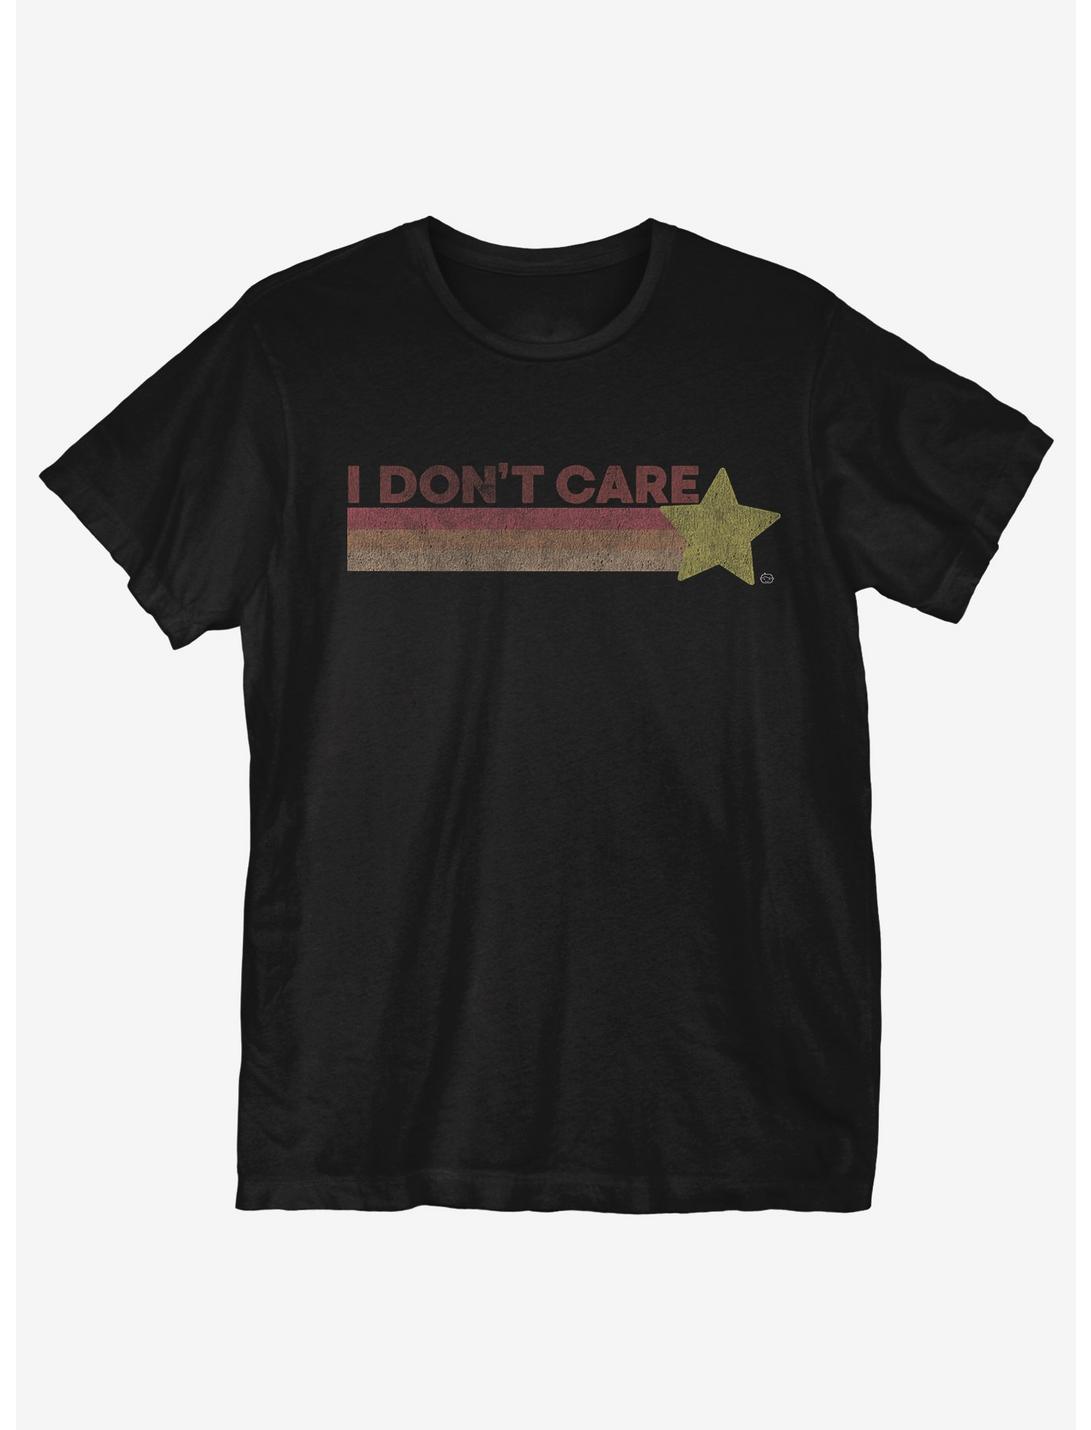 Don't Care T-Shirt, BLACK, hi-res